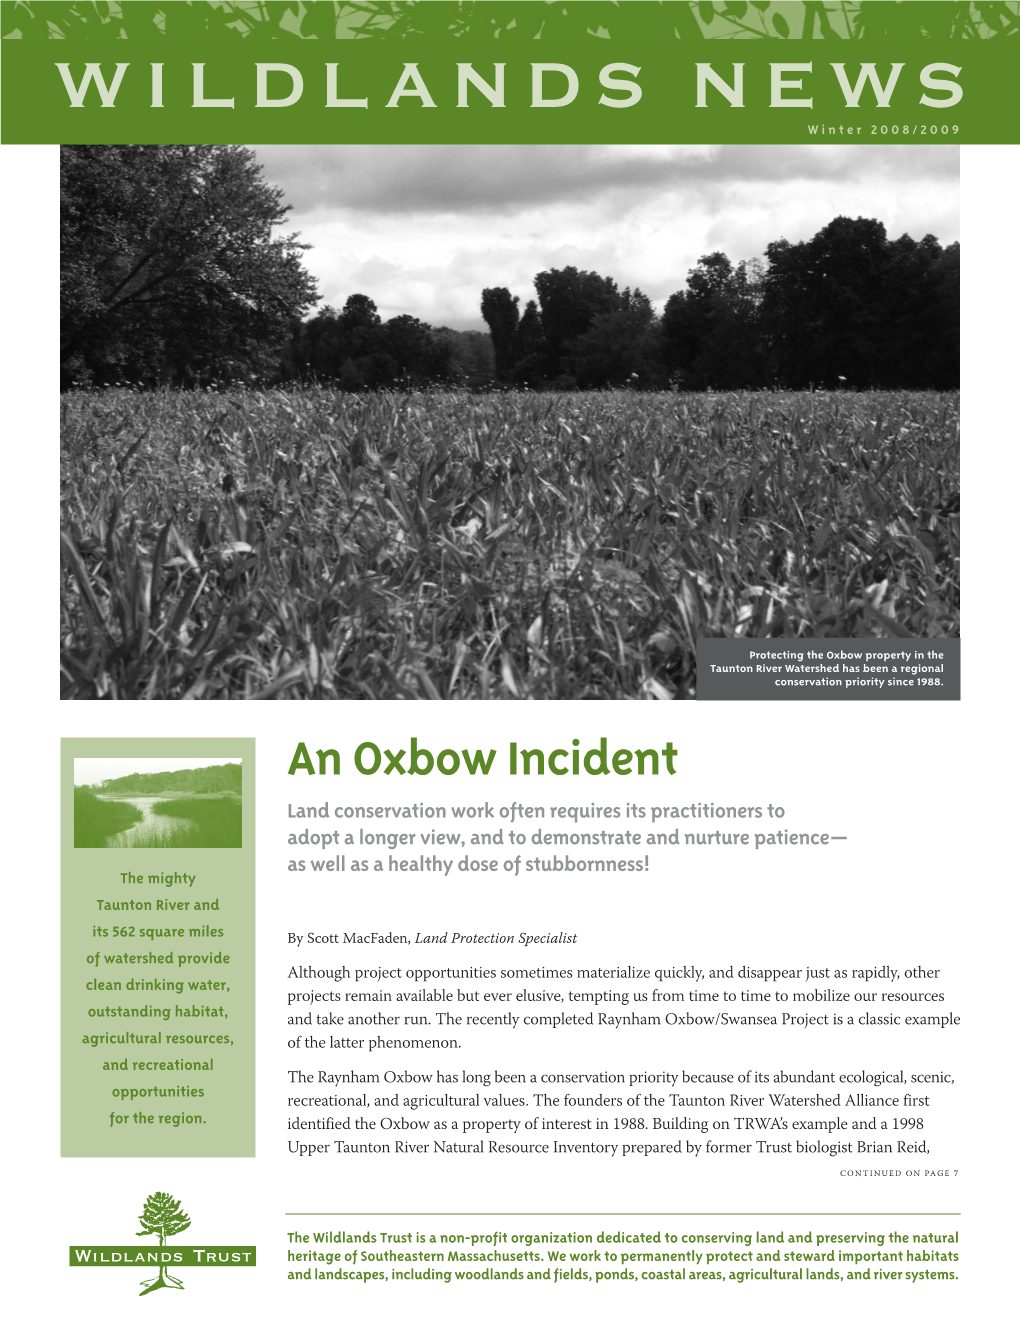 An Oxbow Incident